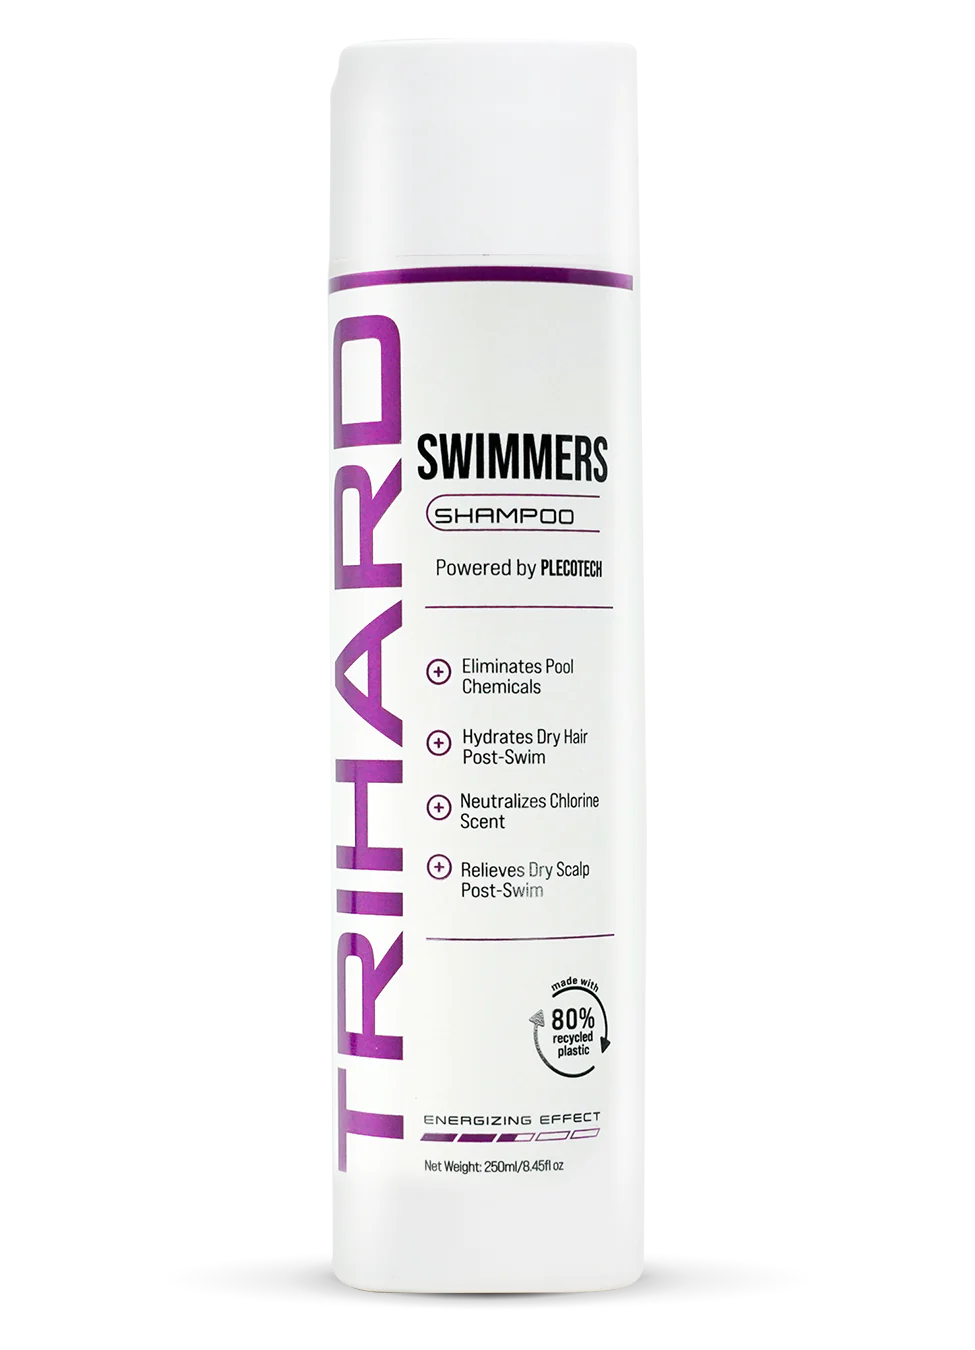 Trihard Swimmers Shampoo